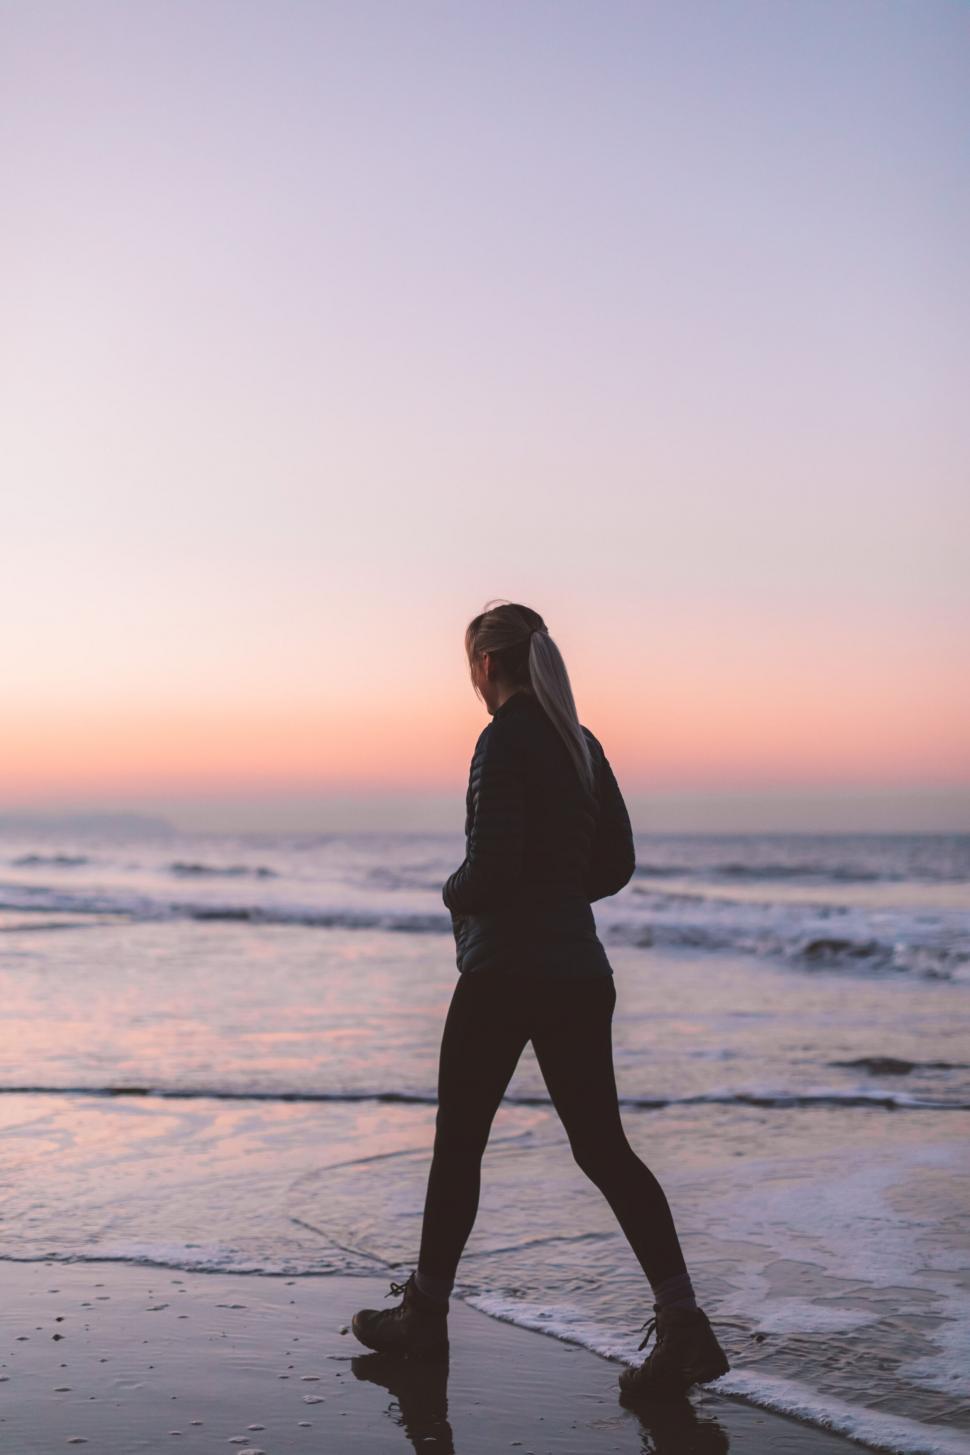 Free Image of Woman walking on beach at sunset 